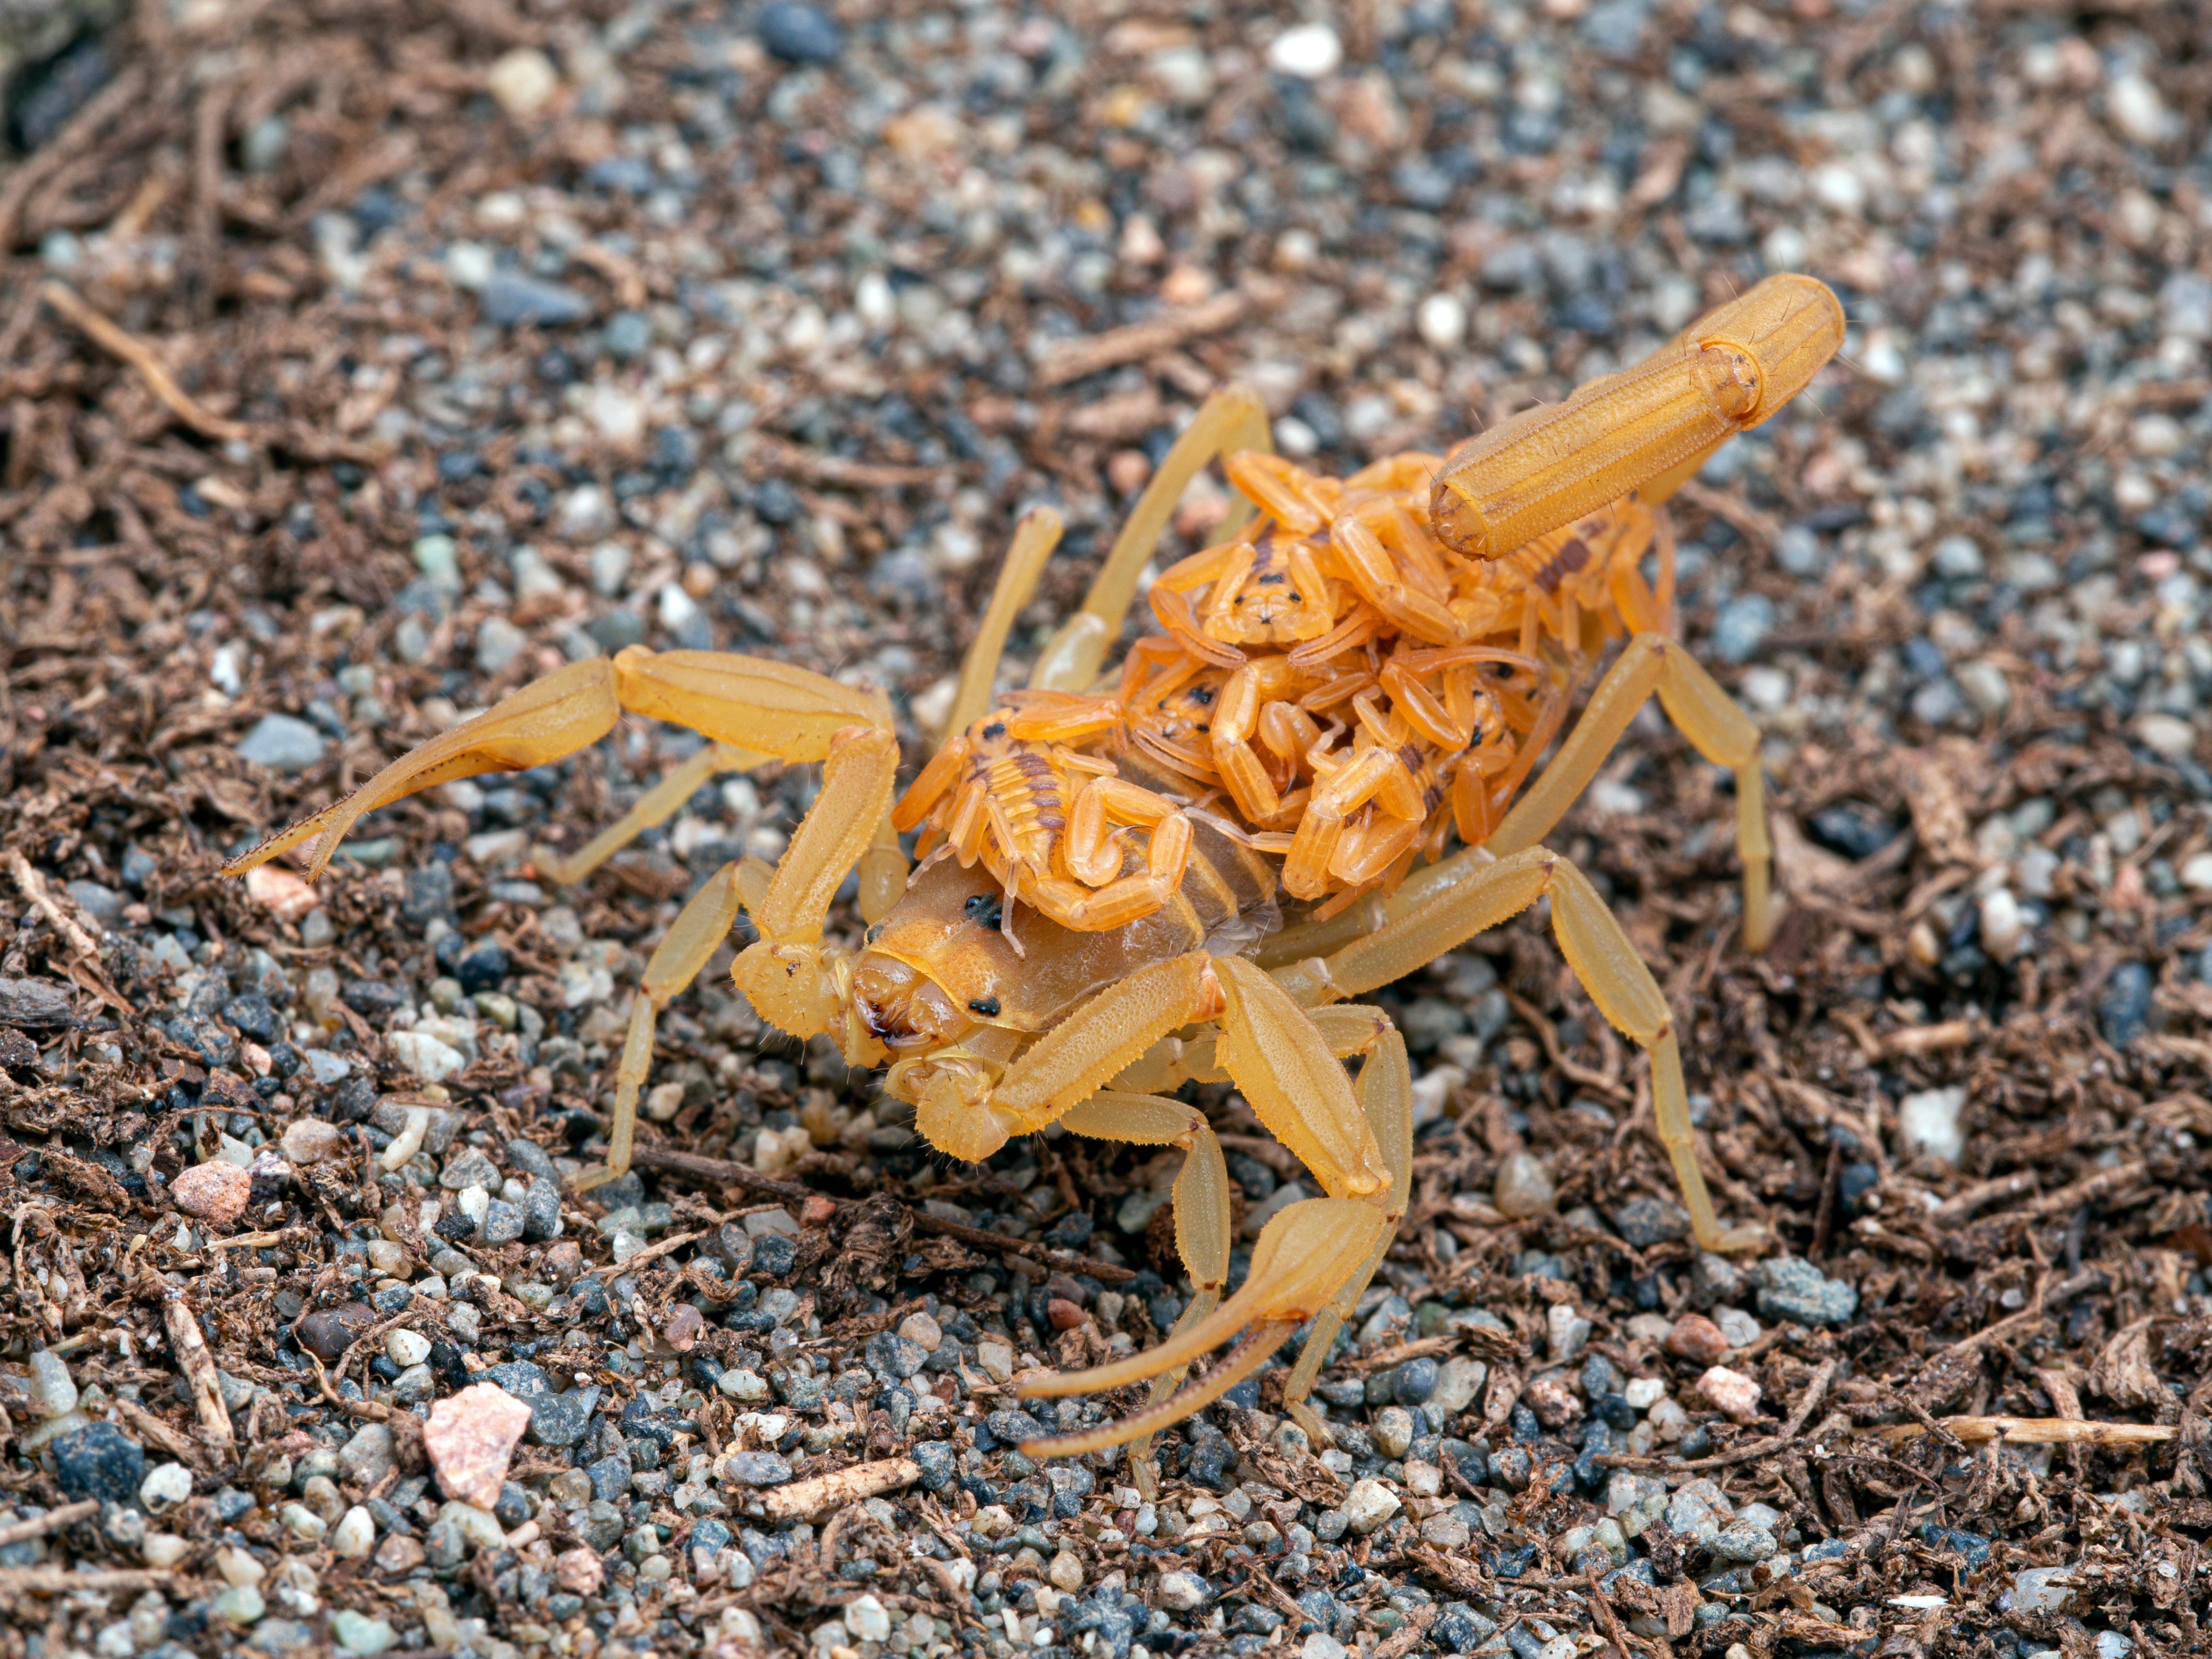 Scorpion Activity in Arizona